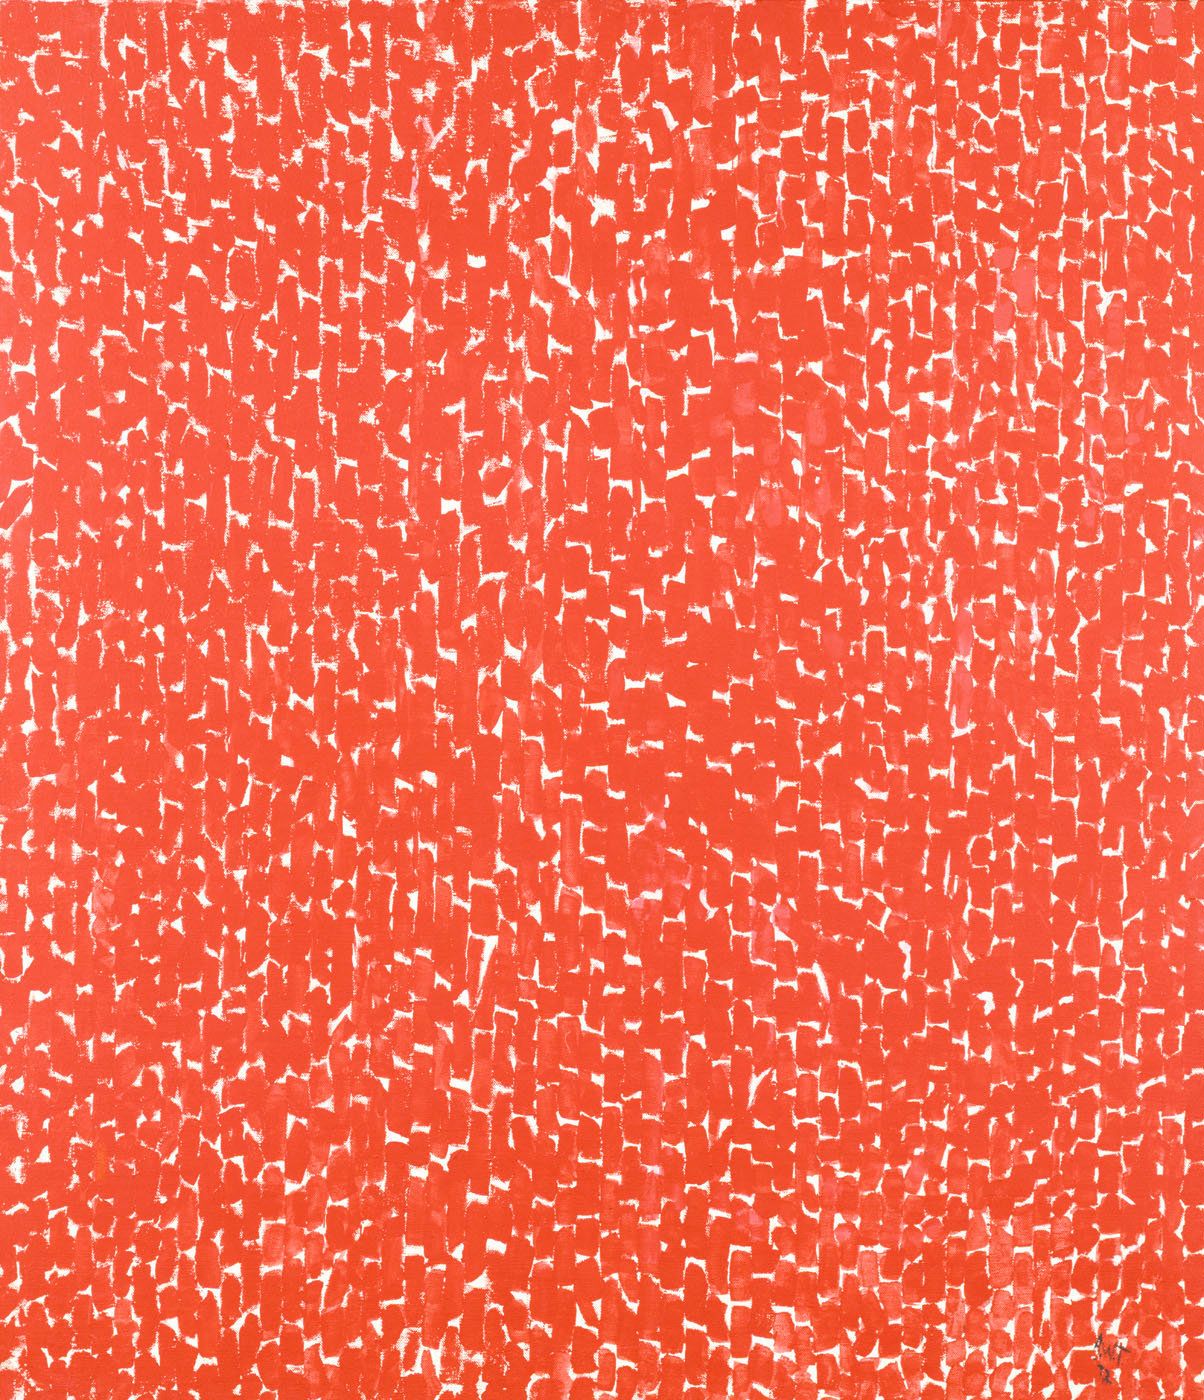 Alma Thomas, "Antares," 1972, acrylic on canvas, 65 3/4 x 56 1/2 in. (167.0 x 143.5 cm)